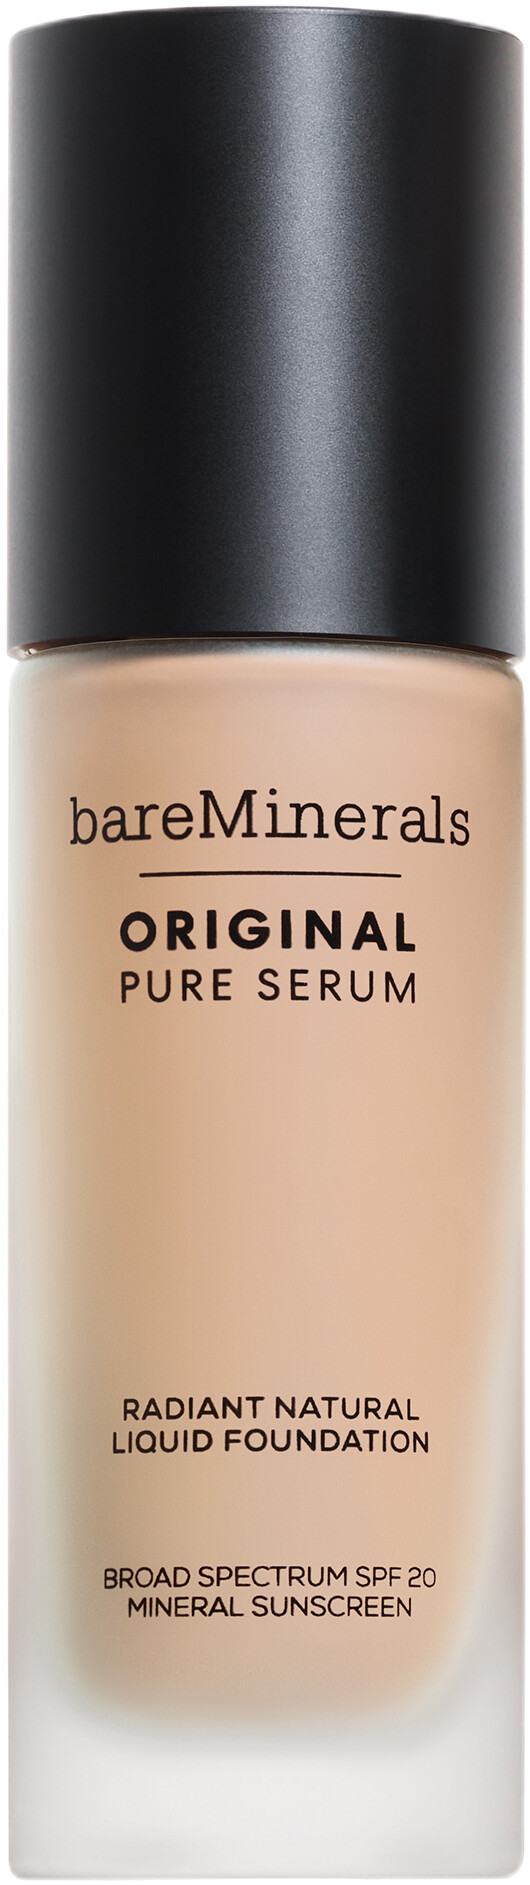 bareMinerals Original Pure Serum Radiant Natural Liquid Foundation SPF20 30ml 2 - Light Cool